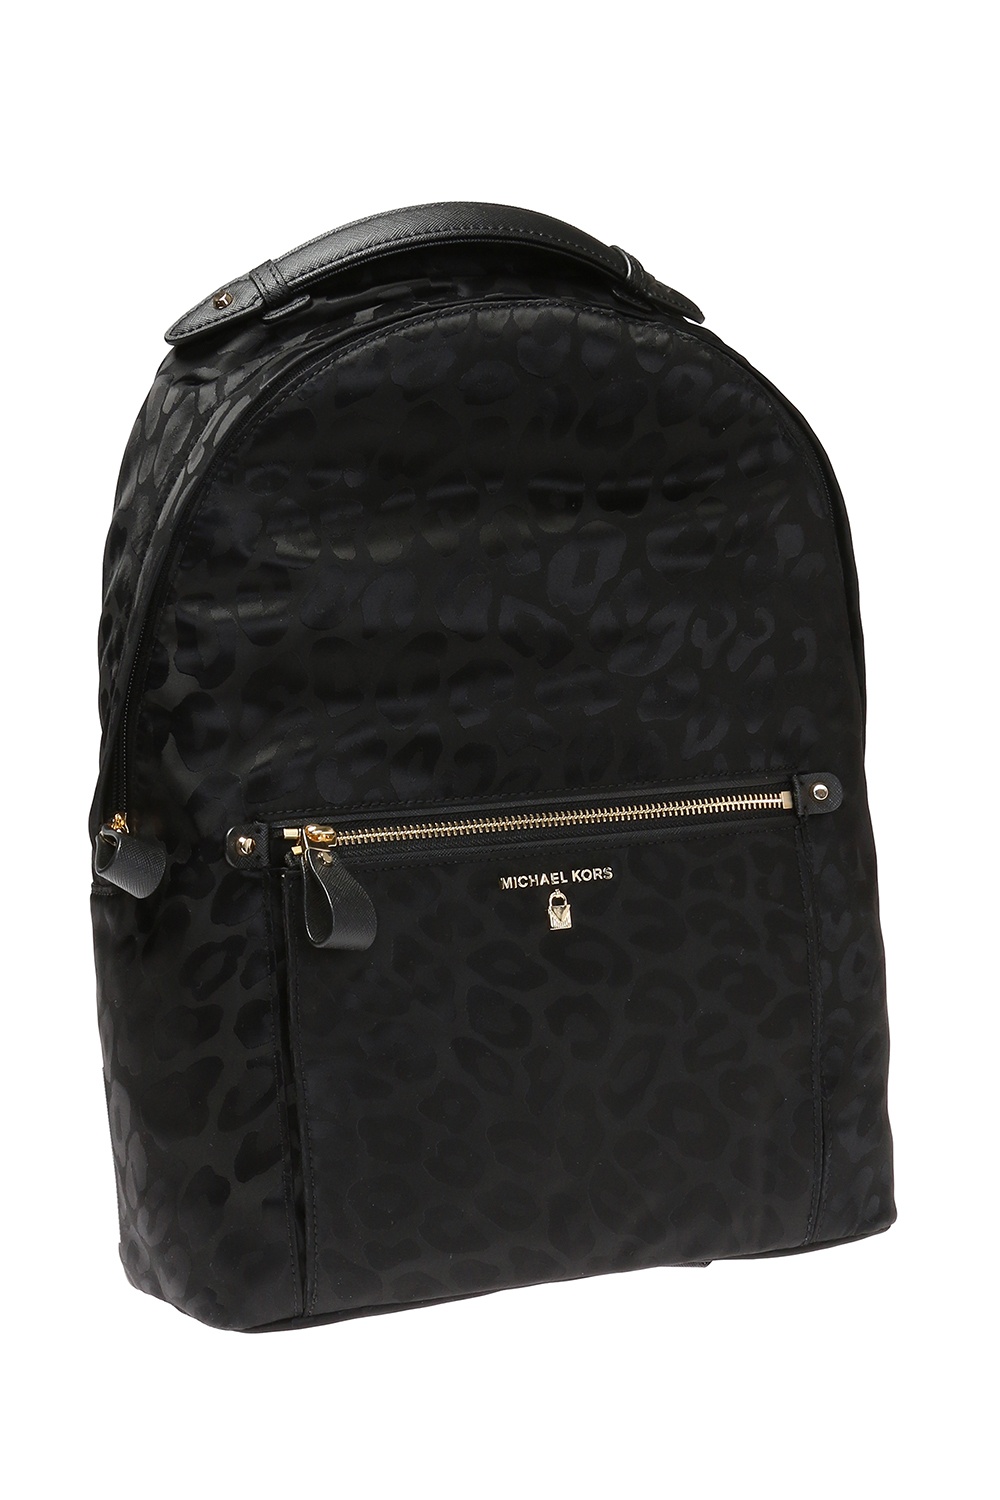 michael kors kelsey leopard backpack